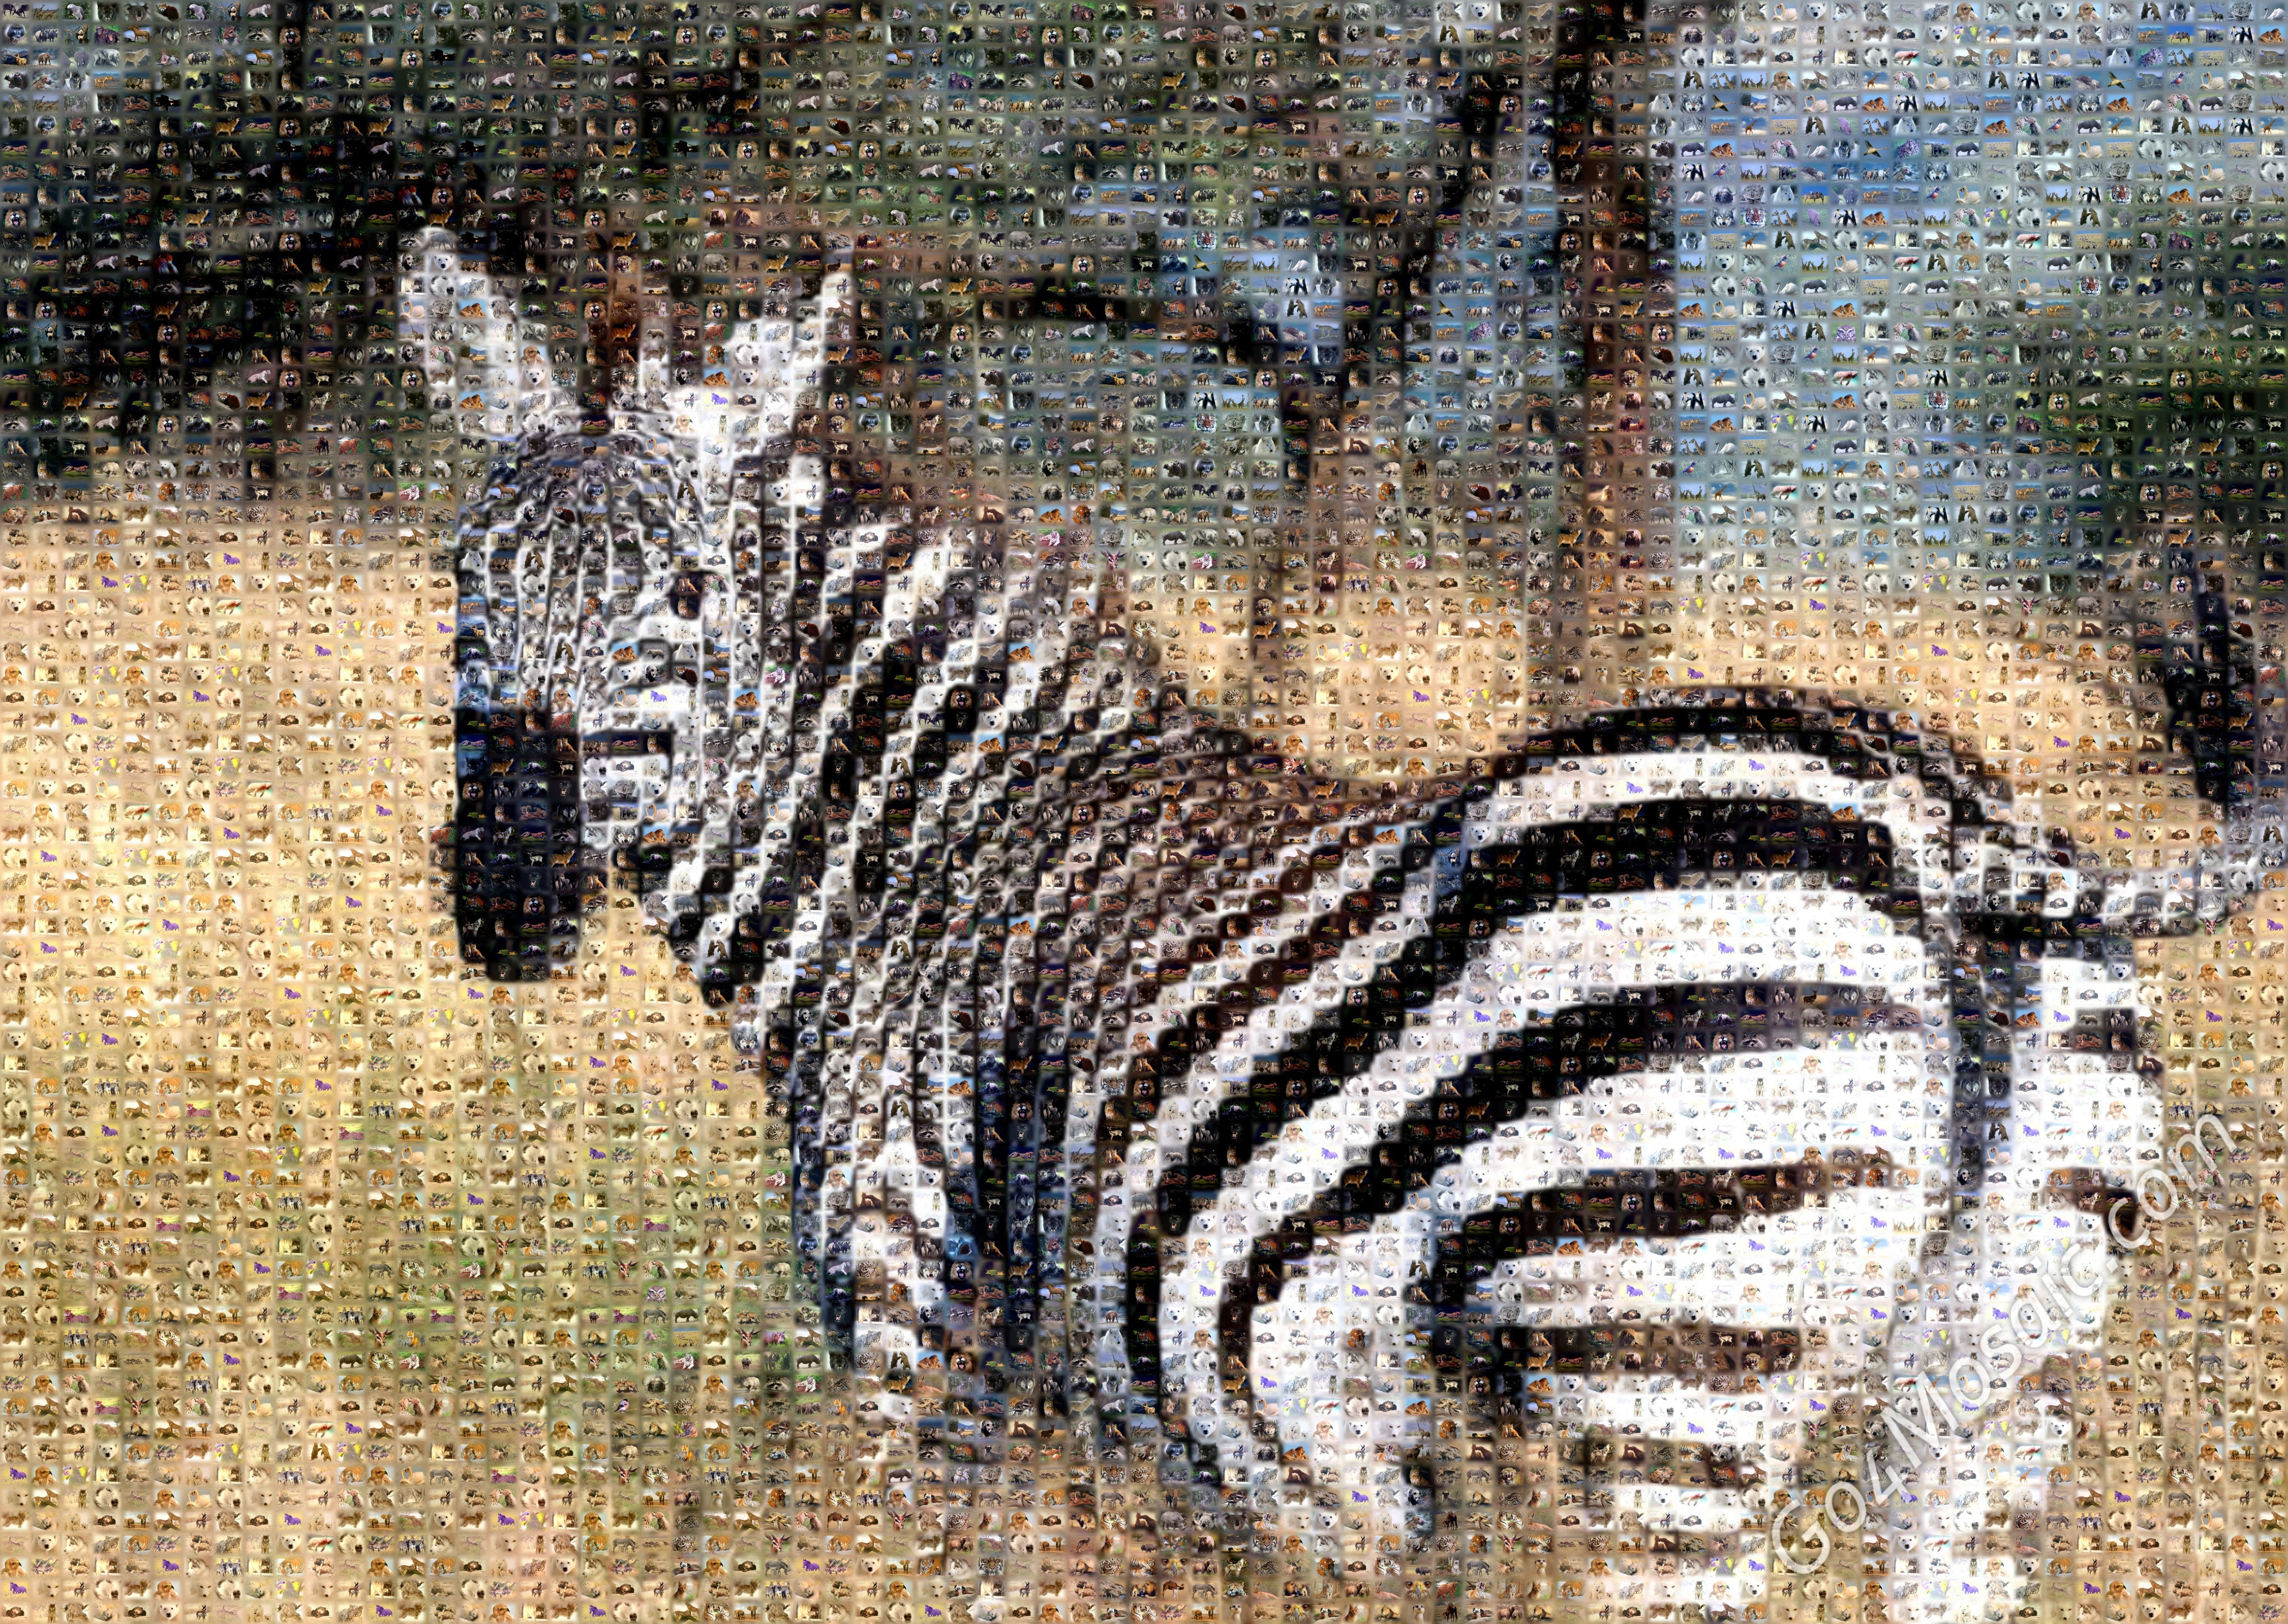 Zebra mosaic from Animals